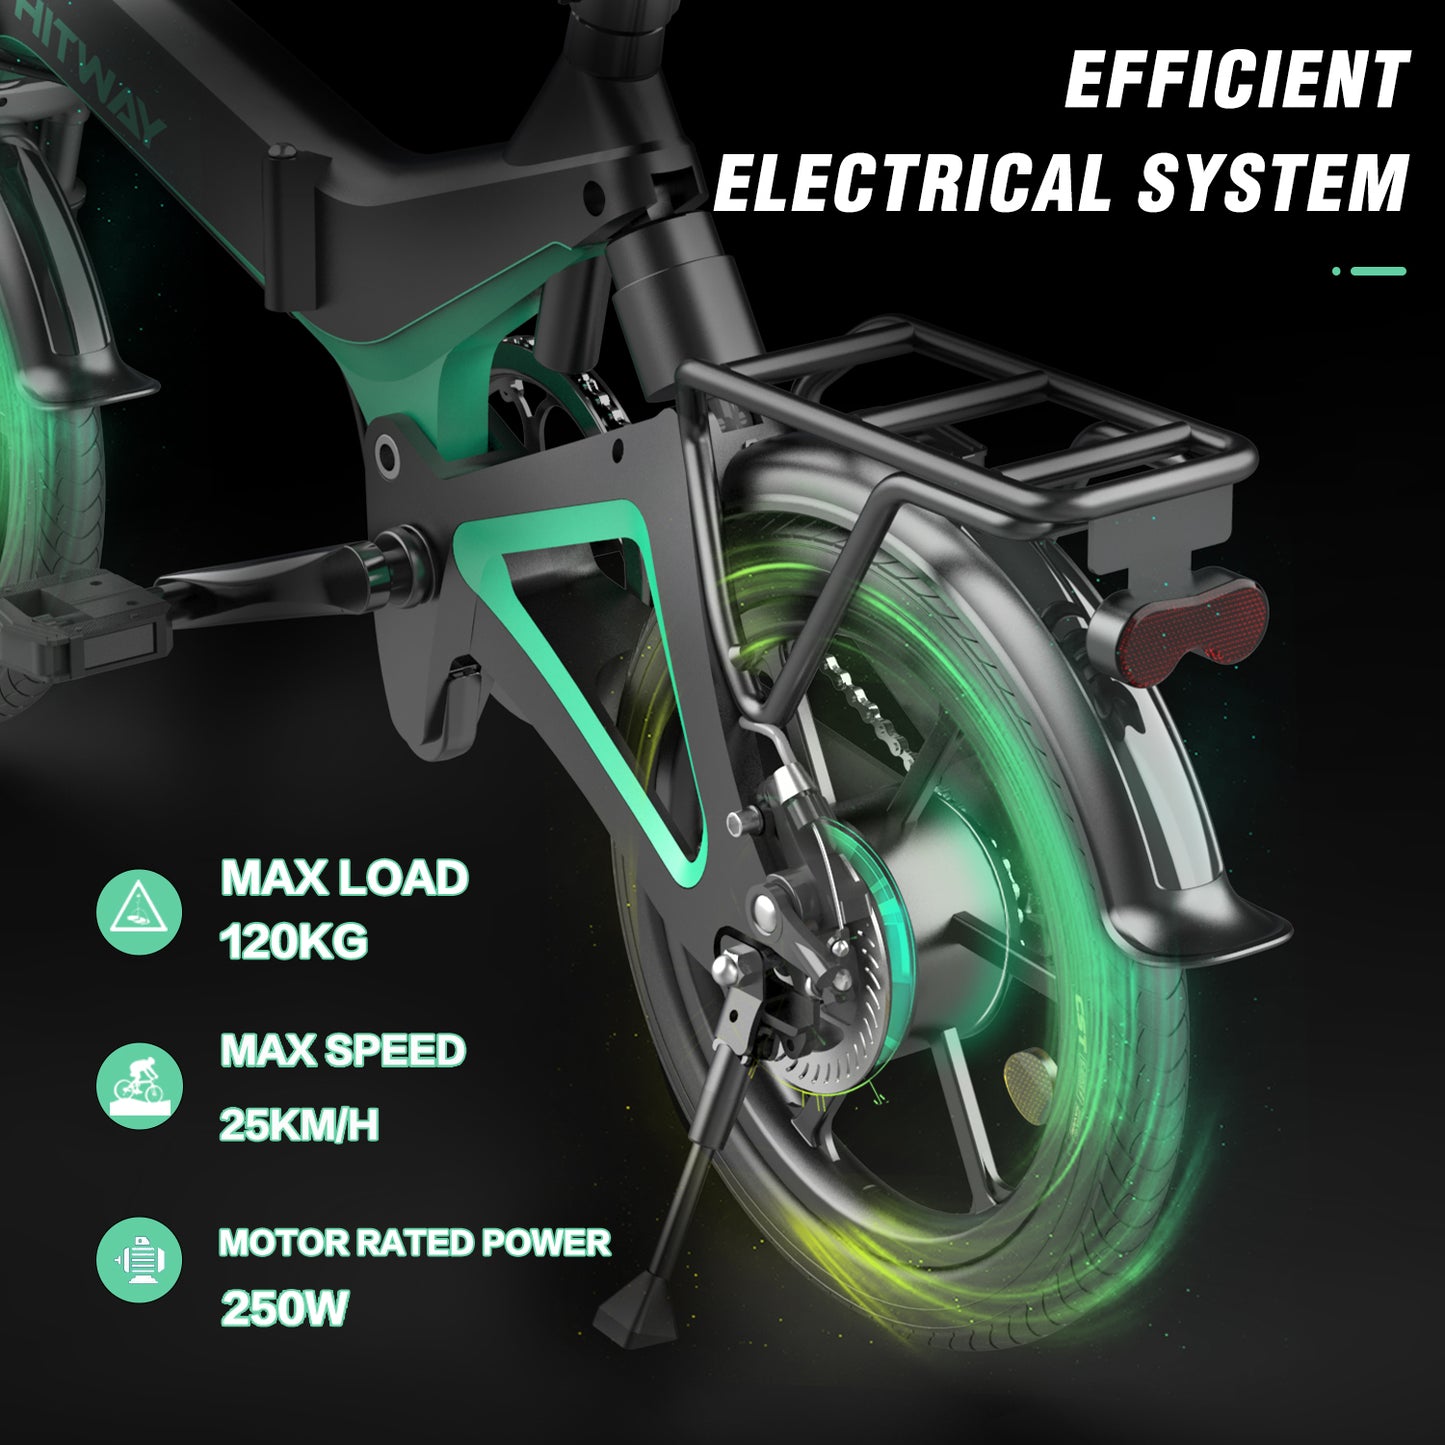 Hitway 14F005 Elektrische Fiets E-bike | Opvouwbaar | 250W Motor | 7.5Ah | 16" | Grijs / Zwart